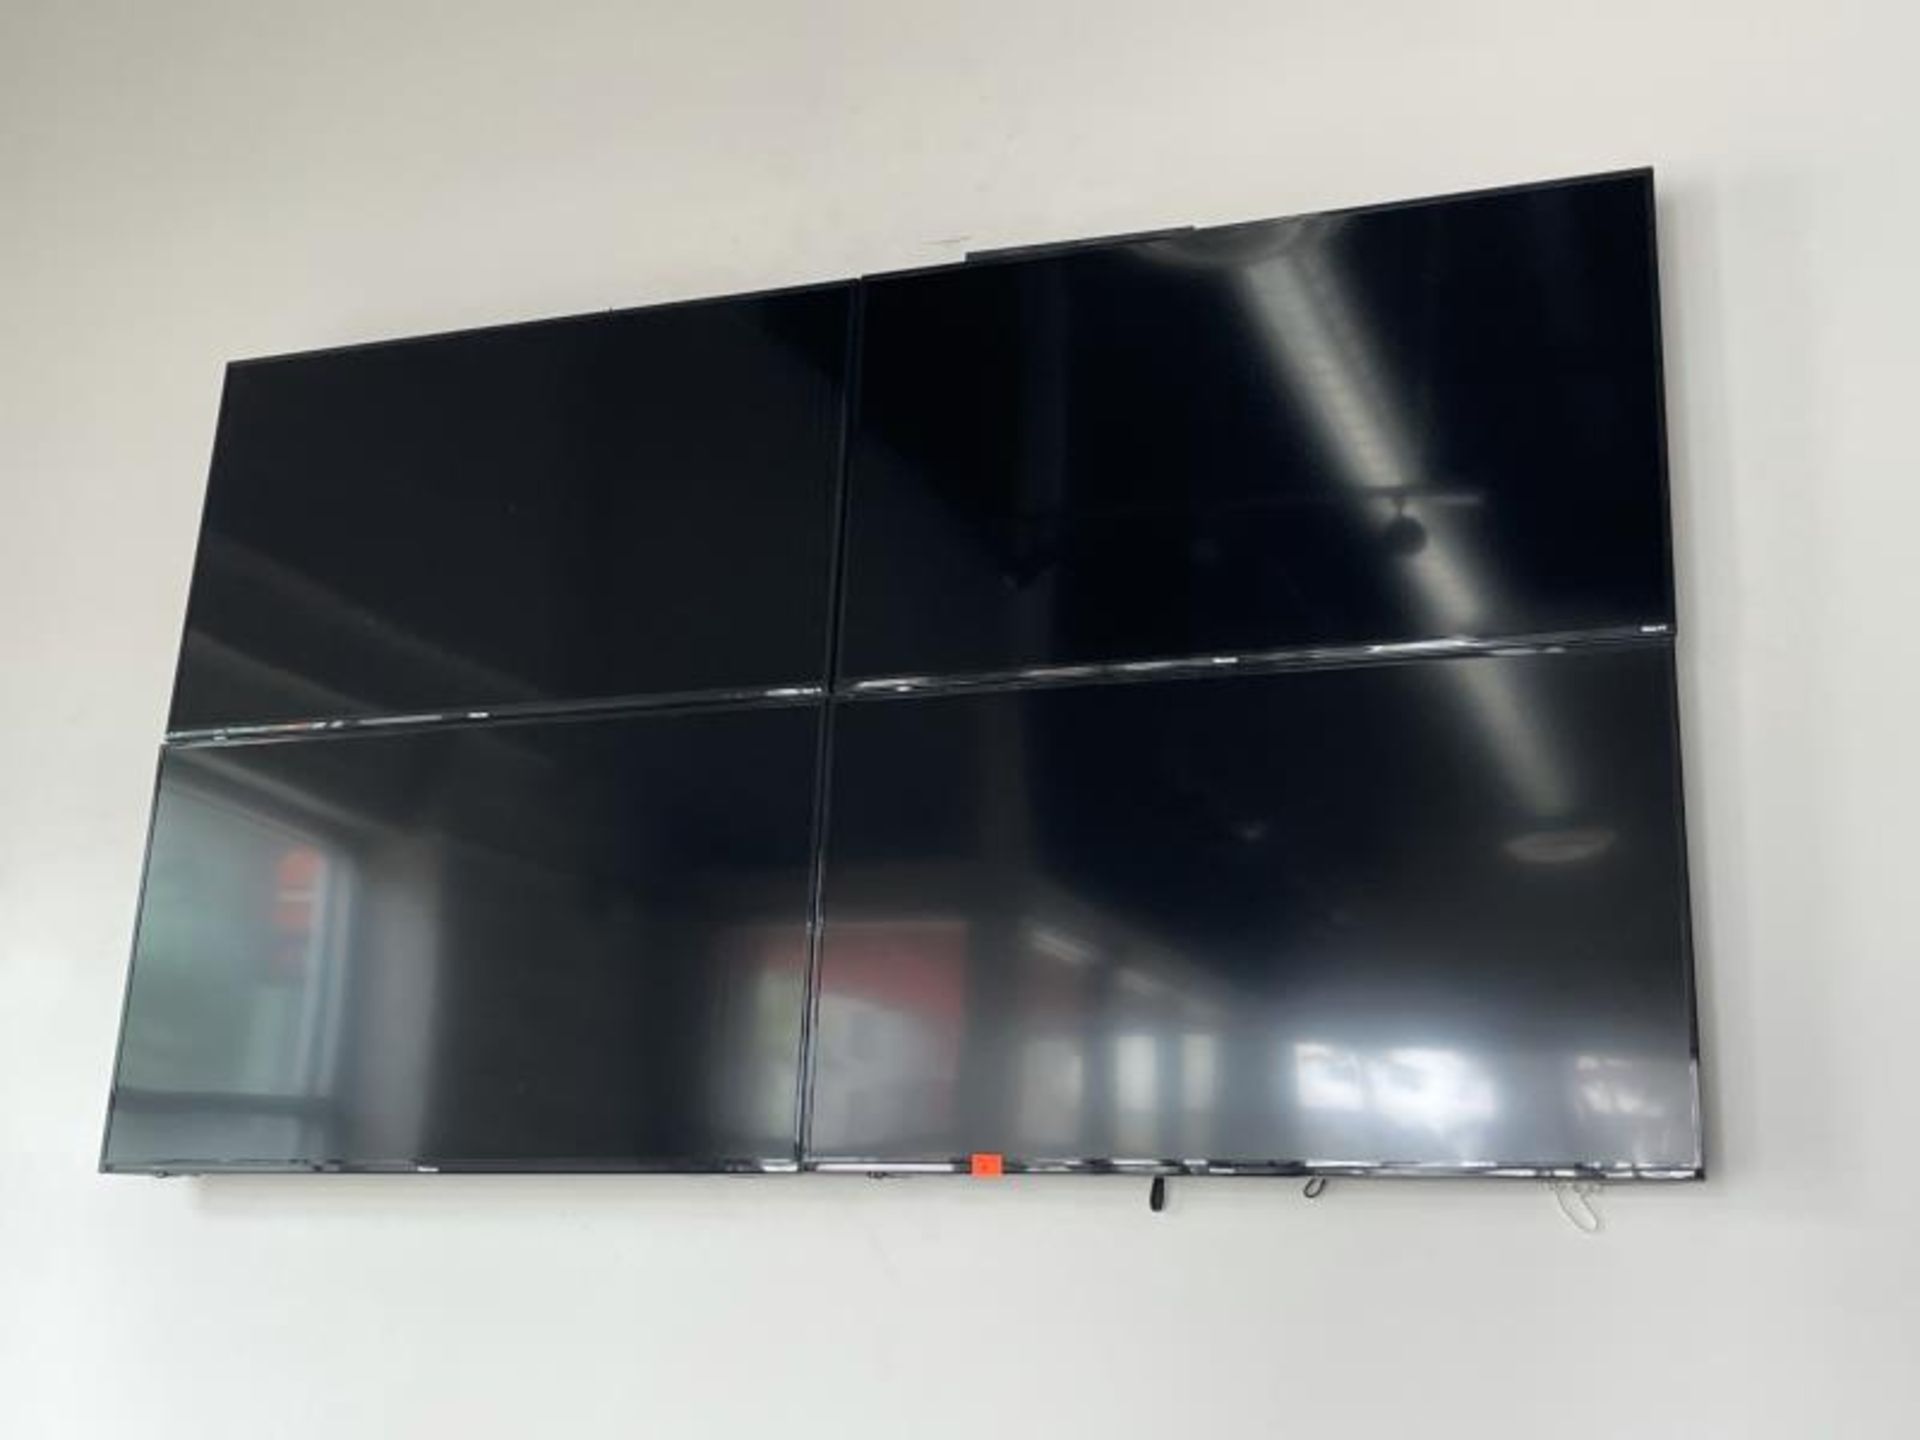 Lot of 4 Hisense Roku flat panel TV, 48" - Image 2 of 4